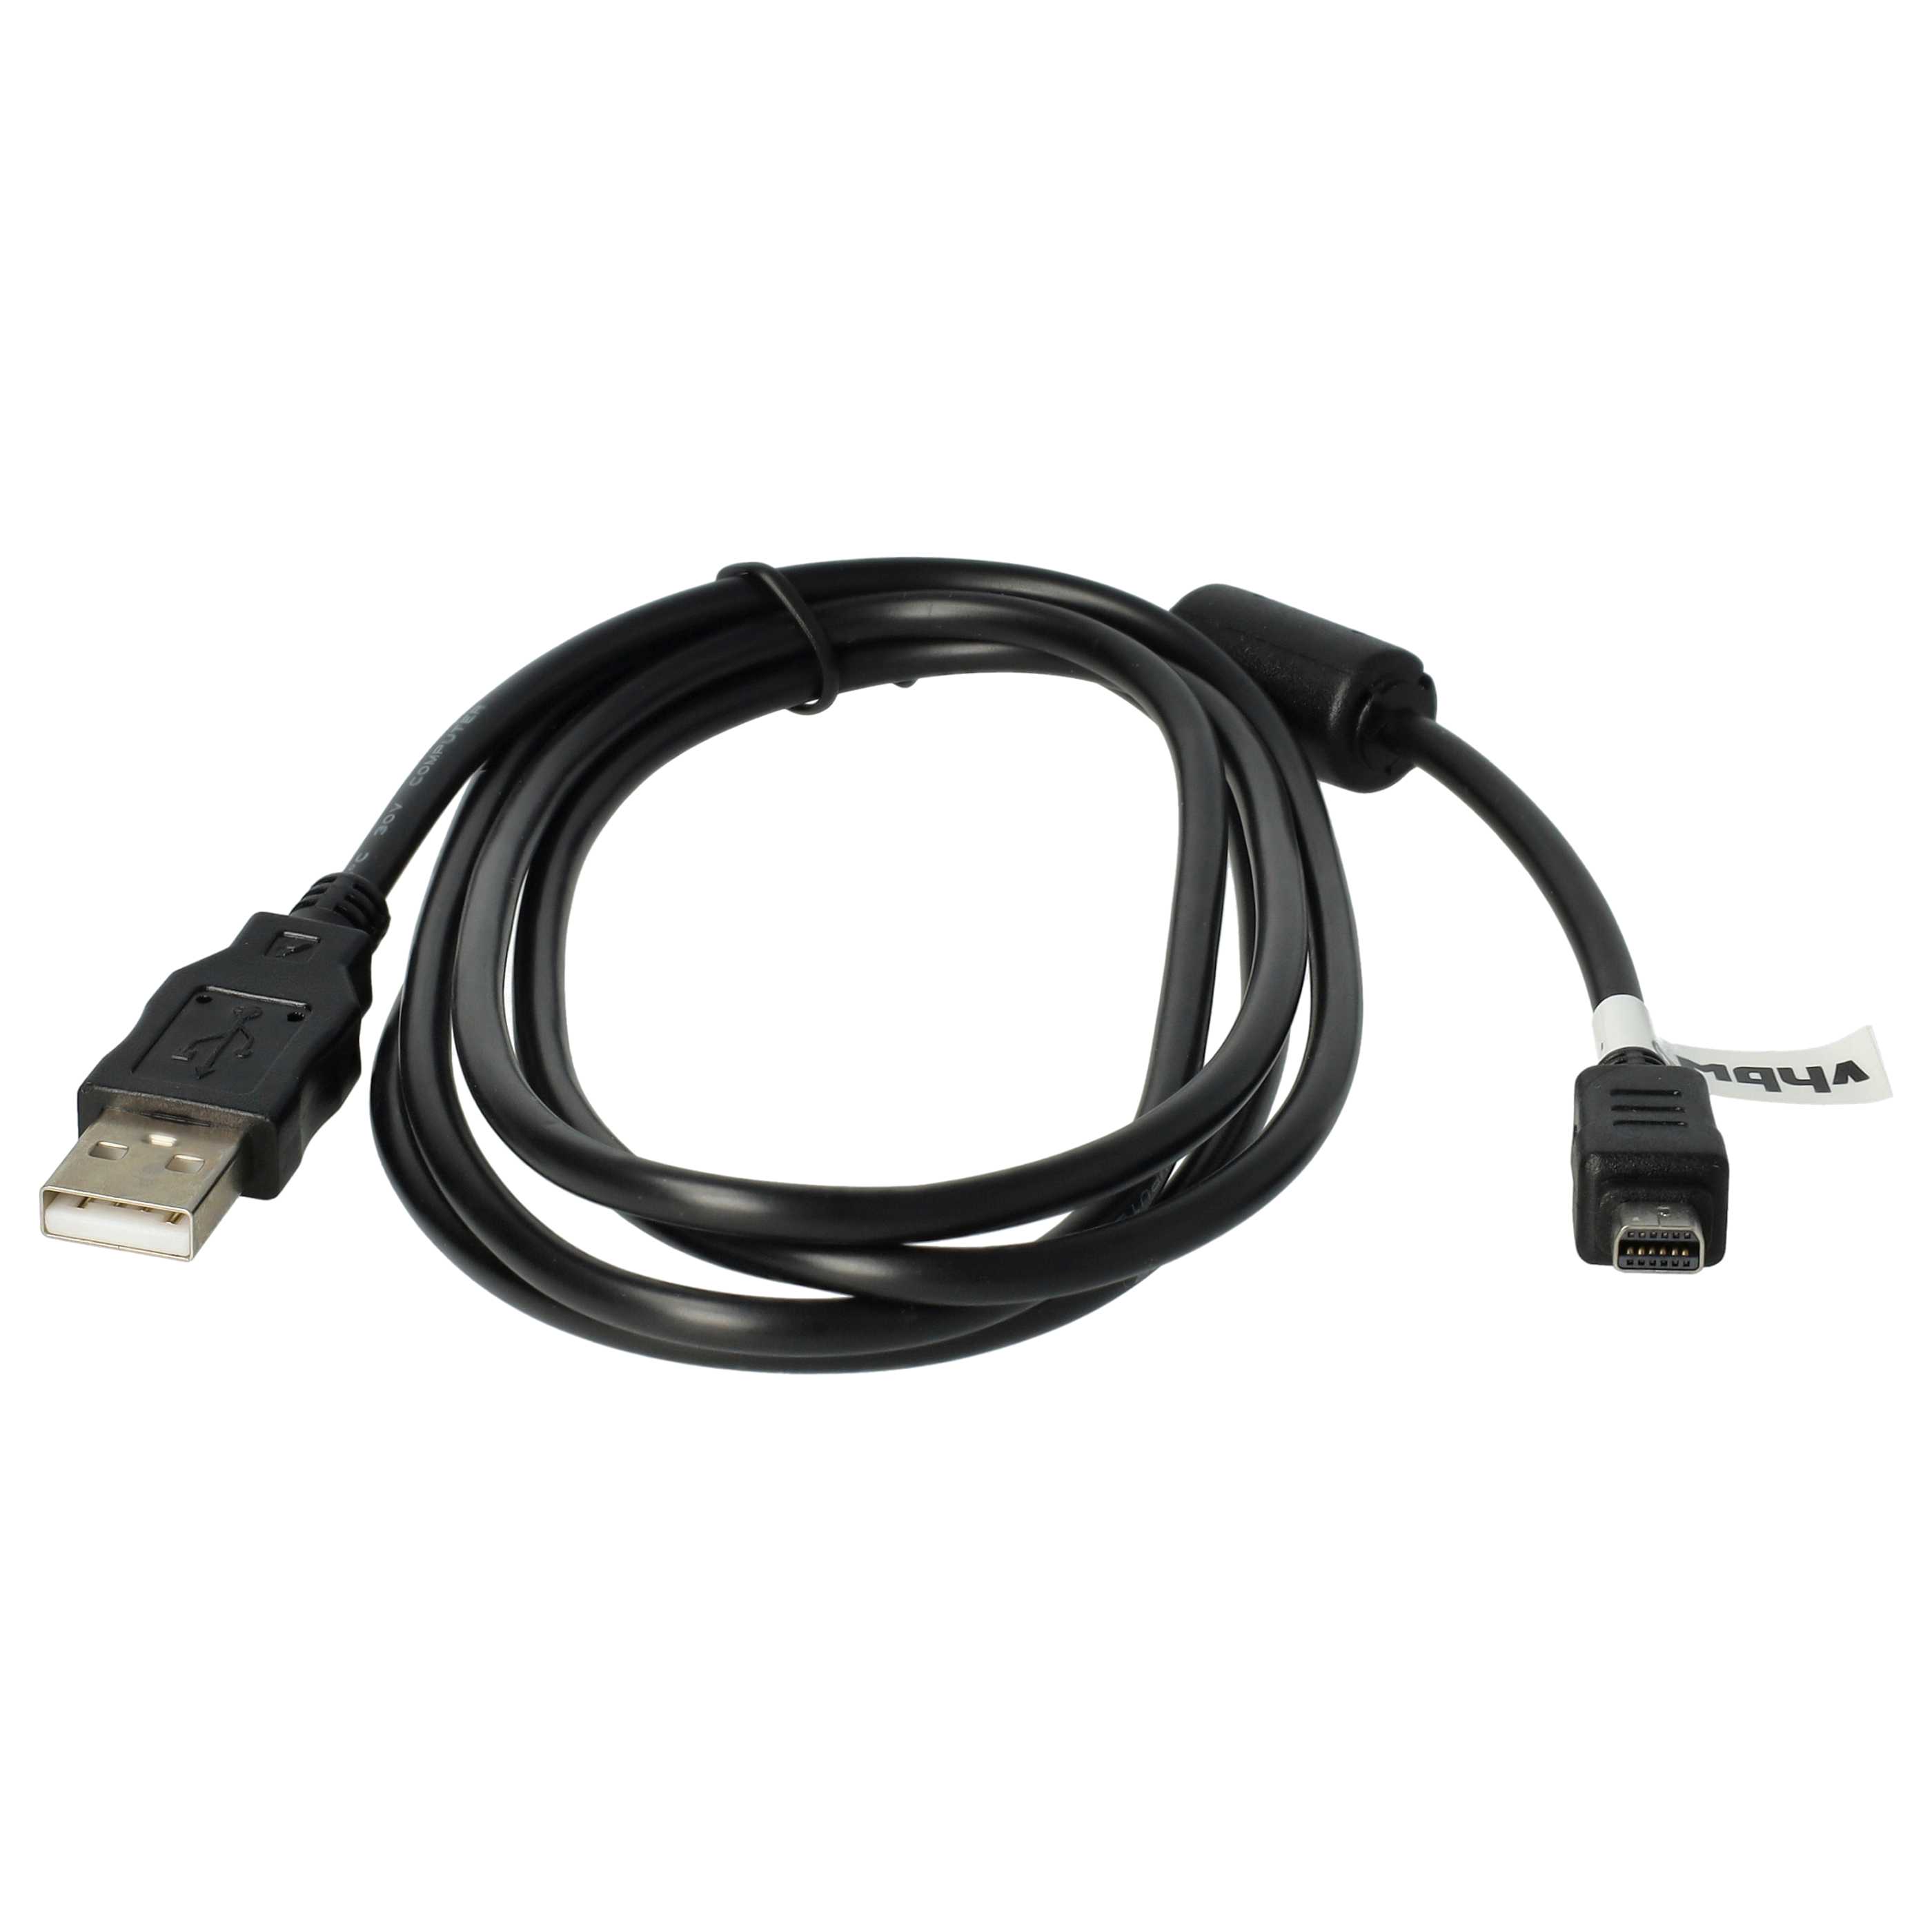 Cable de datos USB reemplaza Olympus CB-USB6, CB-USB5, CB-USB8 para cámaras Olympus - 150 cm